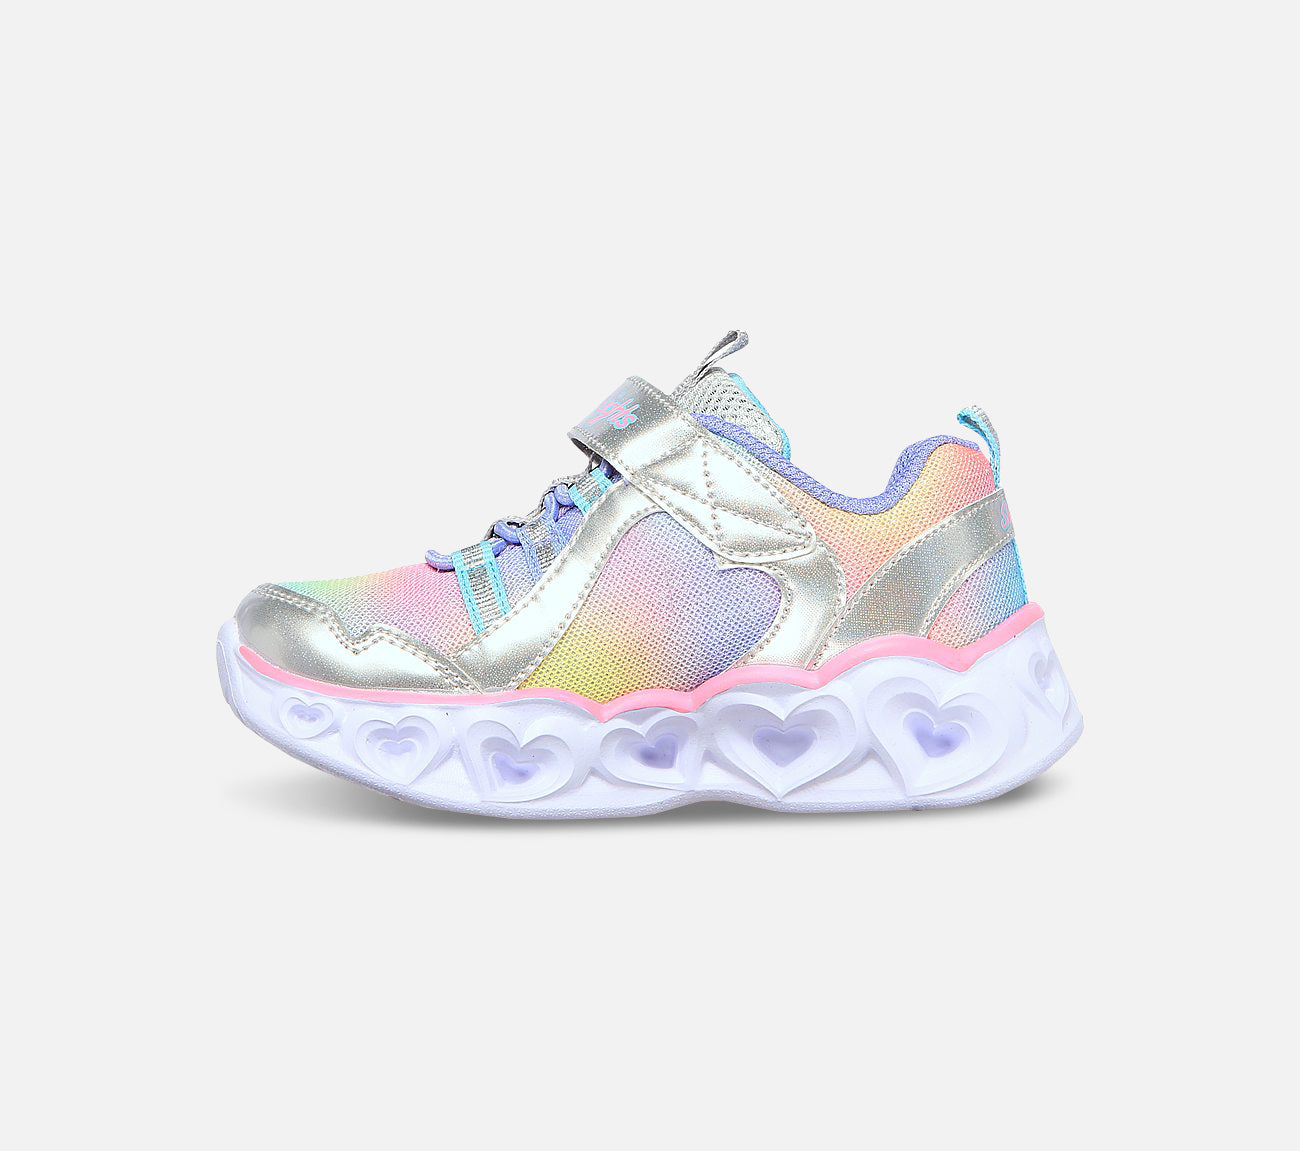 Hearts Lights - Rainbow Lux Shoe Skechers